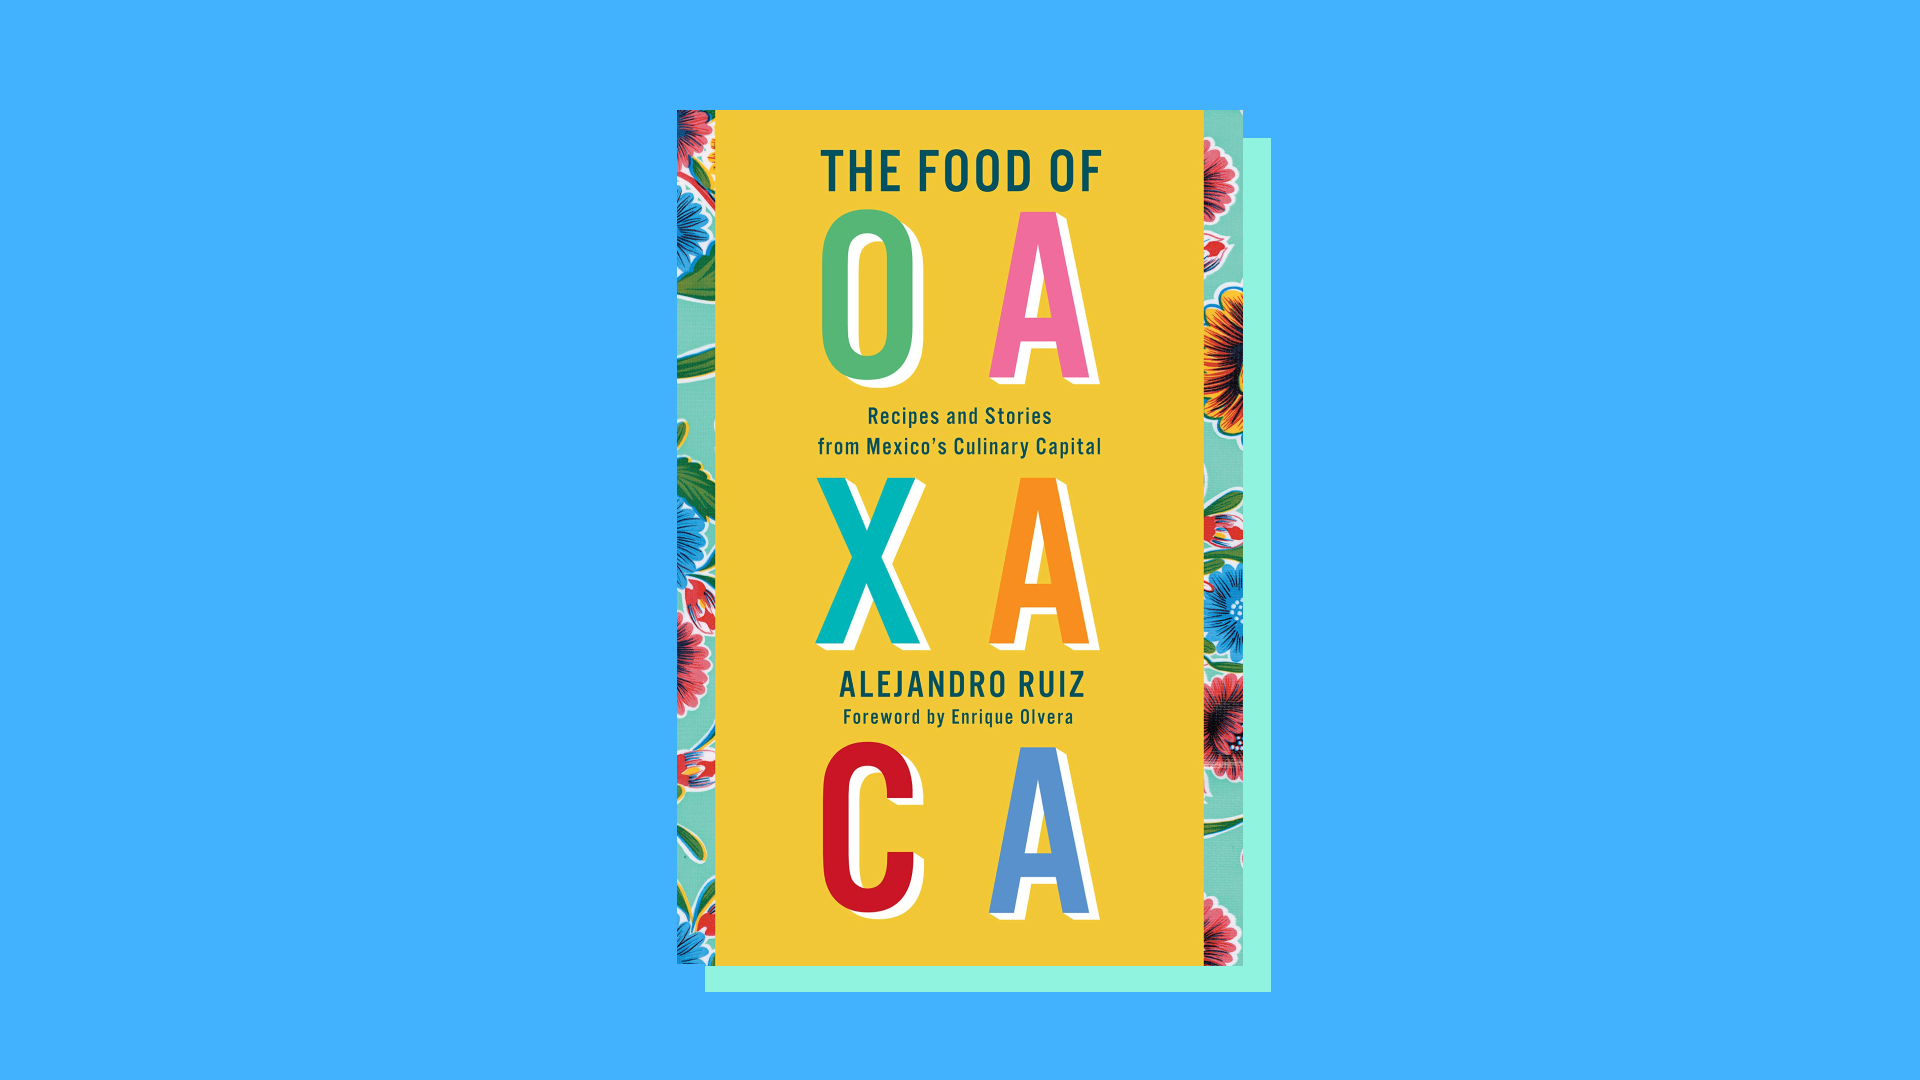 “The Food of Oaxaca: Recipes and Stories from Mexico's Culinary Capital” By Alejandro Ruiz and Carla Altesor 